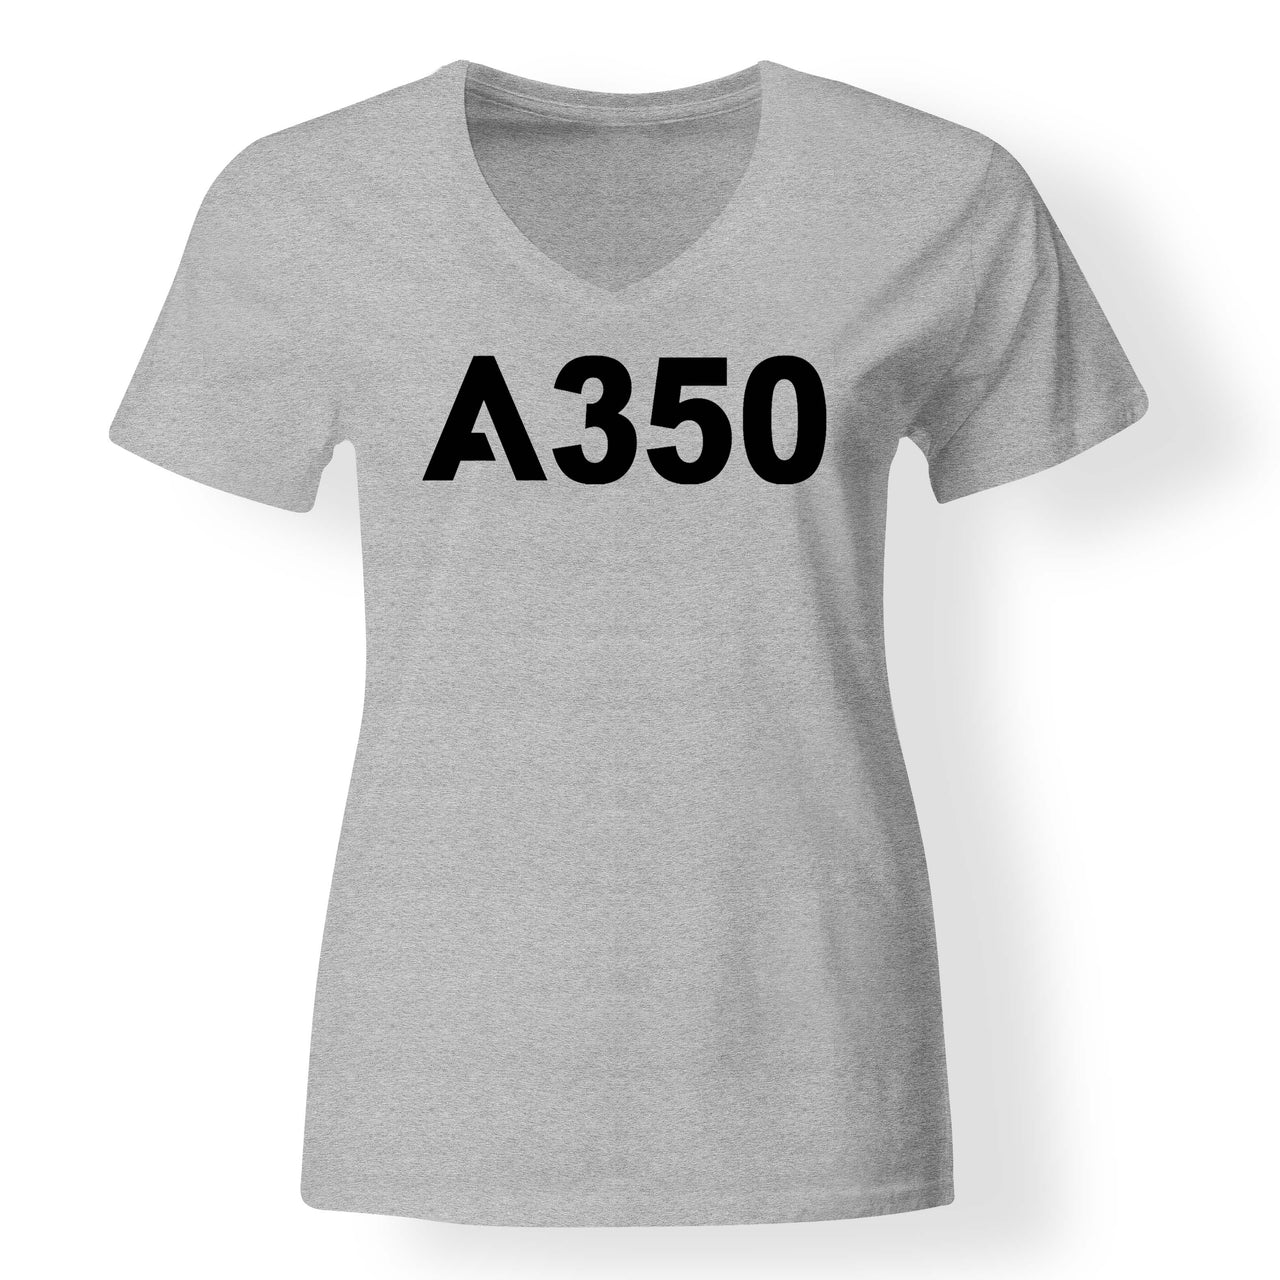 A350 Flat Text Designed V-Neck T-Shirts